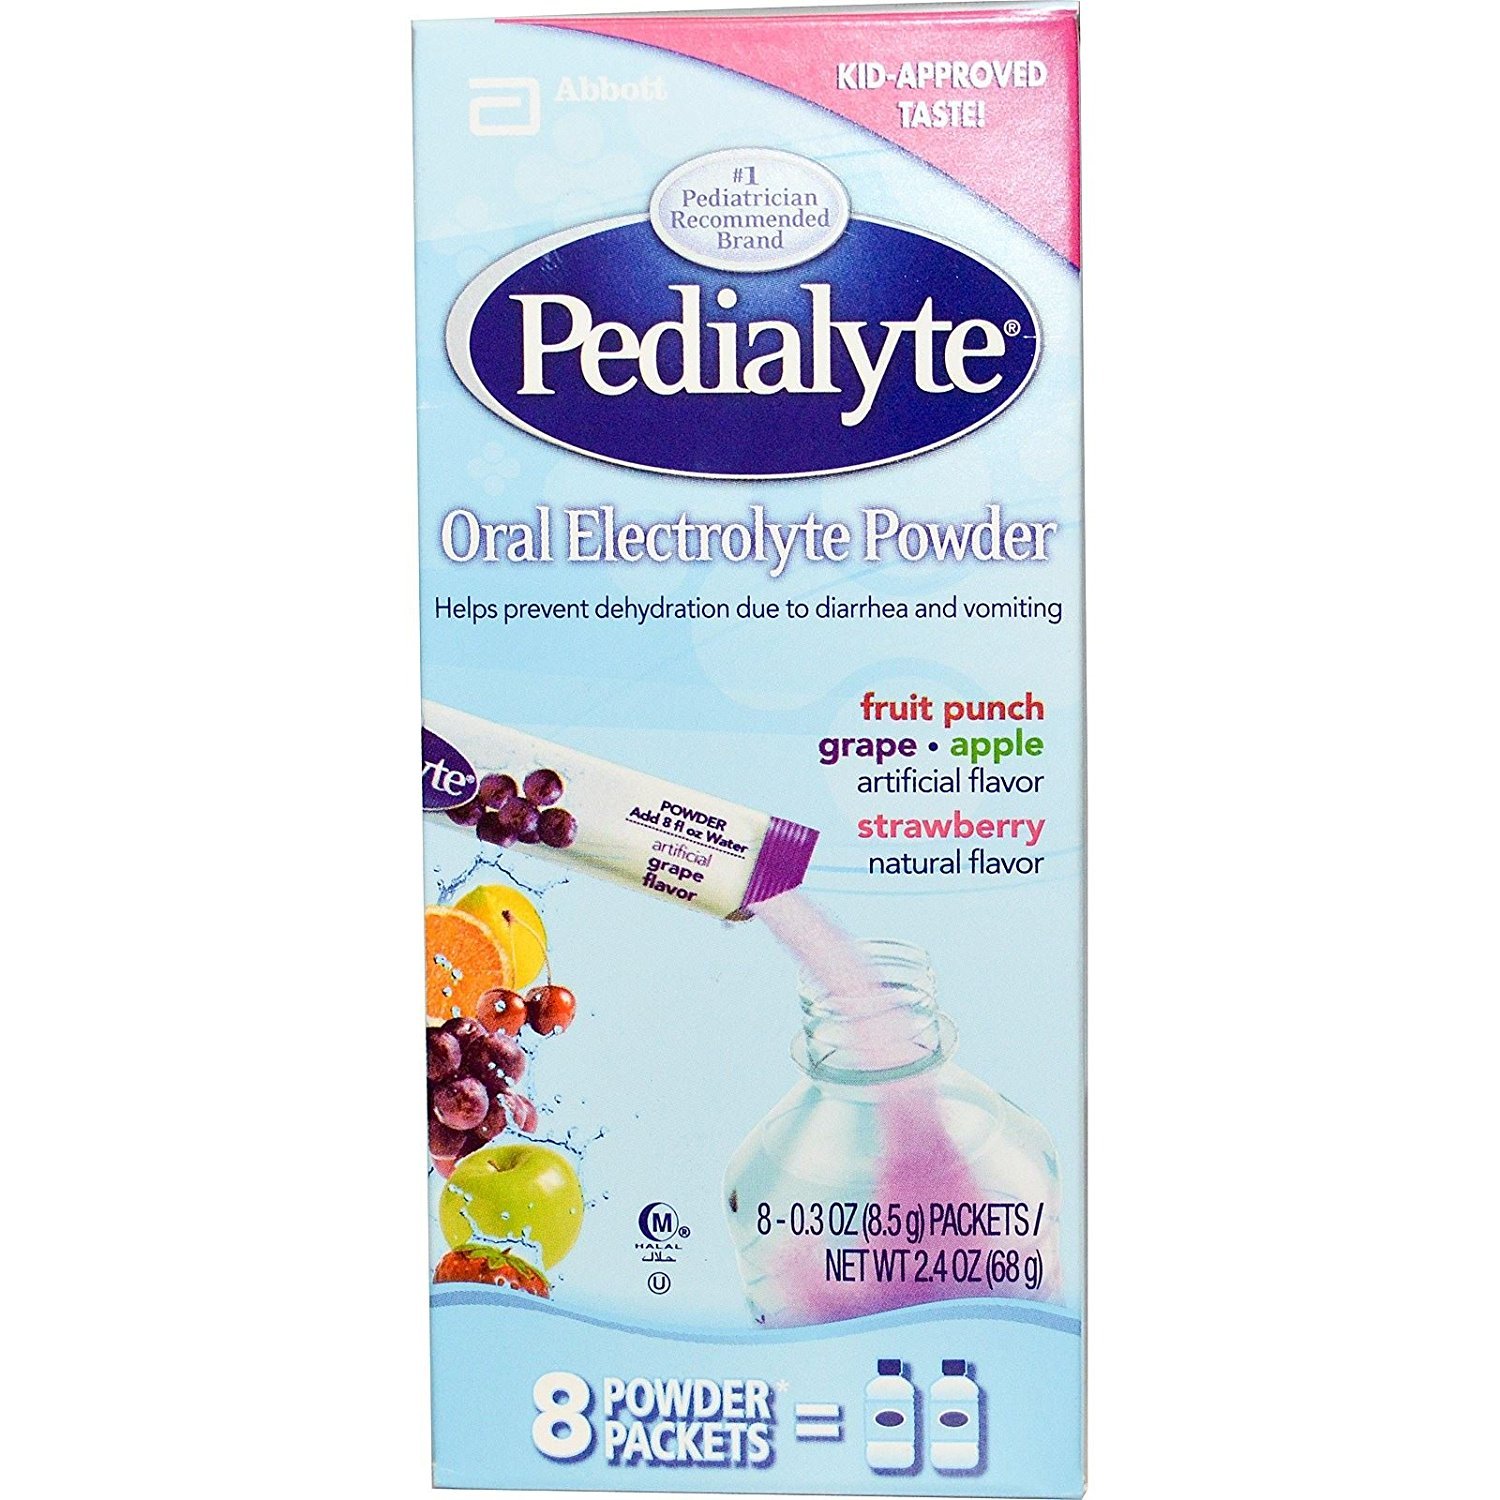 Pedia Lyte Oral Electrolyte Maintenance Powder Variety Pack – -8 Packets by Pedia Lyte